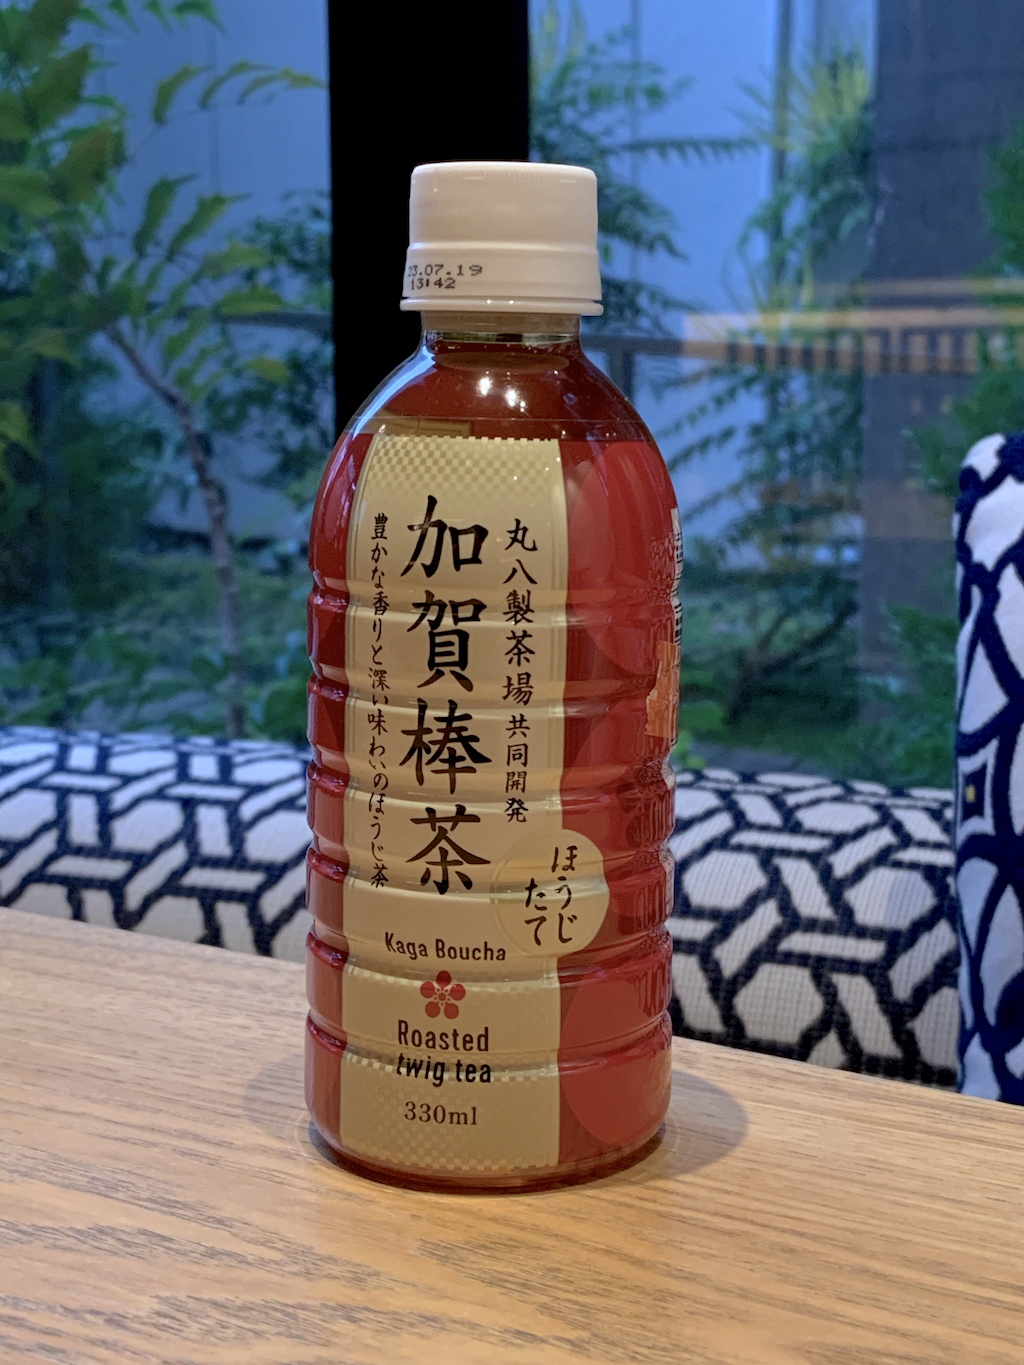 A 330ml bottle of Kaga boucha roasted twig tea, a local variety of tea in Kanazawa